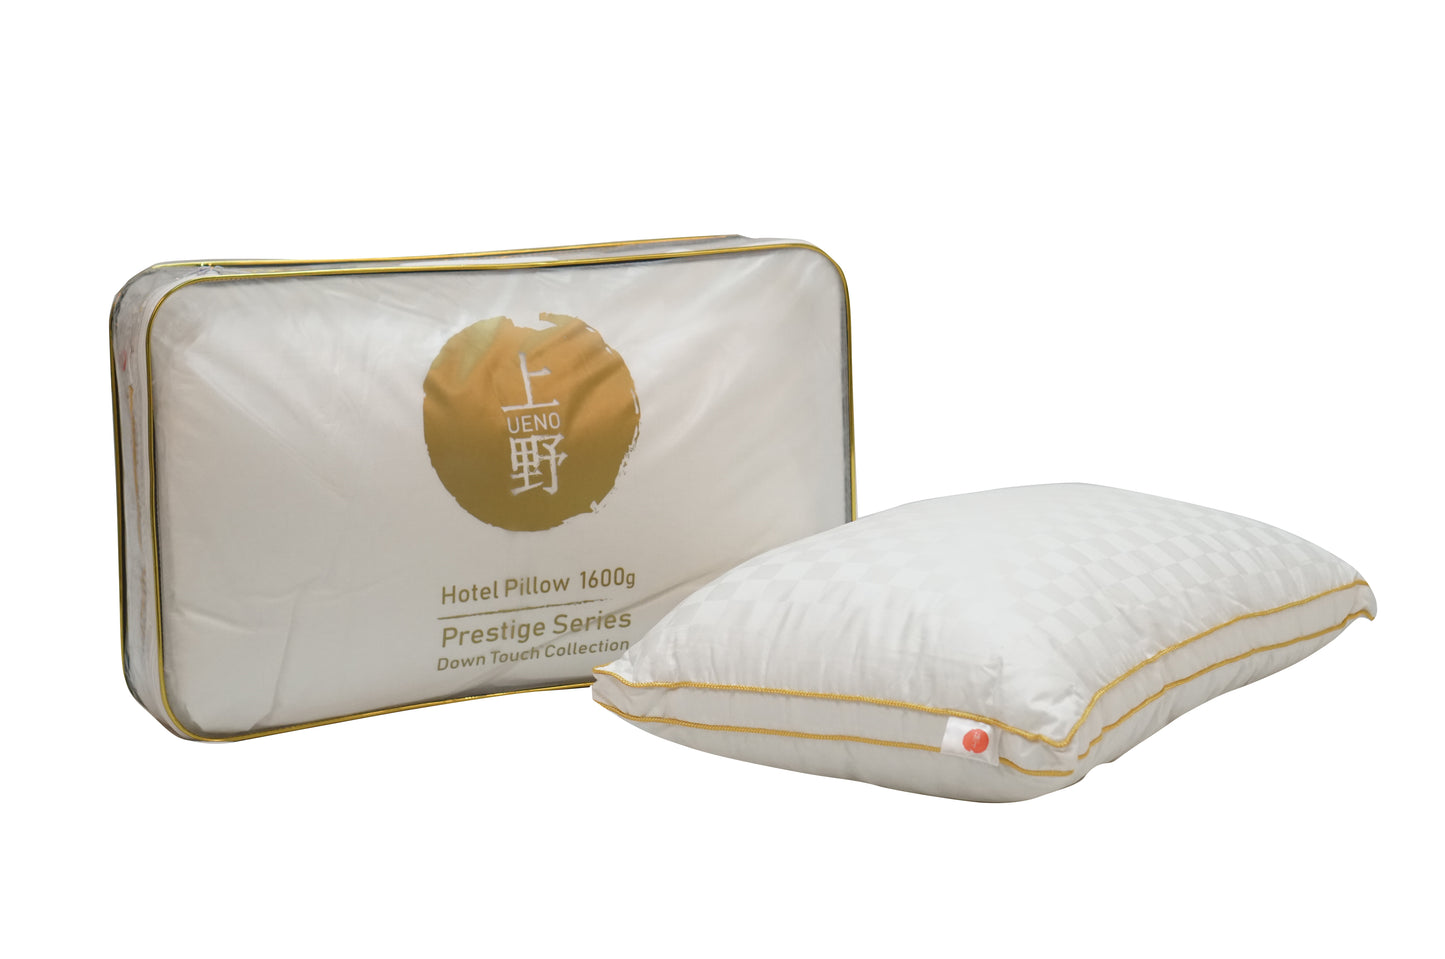 
                  
                    Ueno Down Touch Prestige Pillow
                  
                